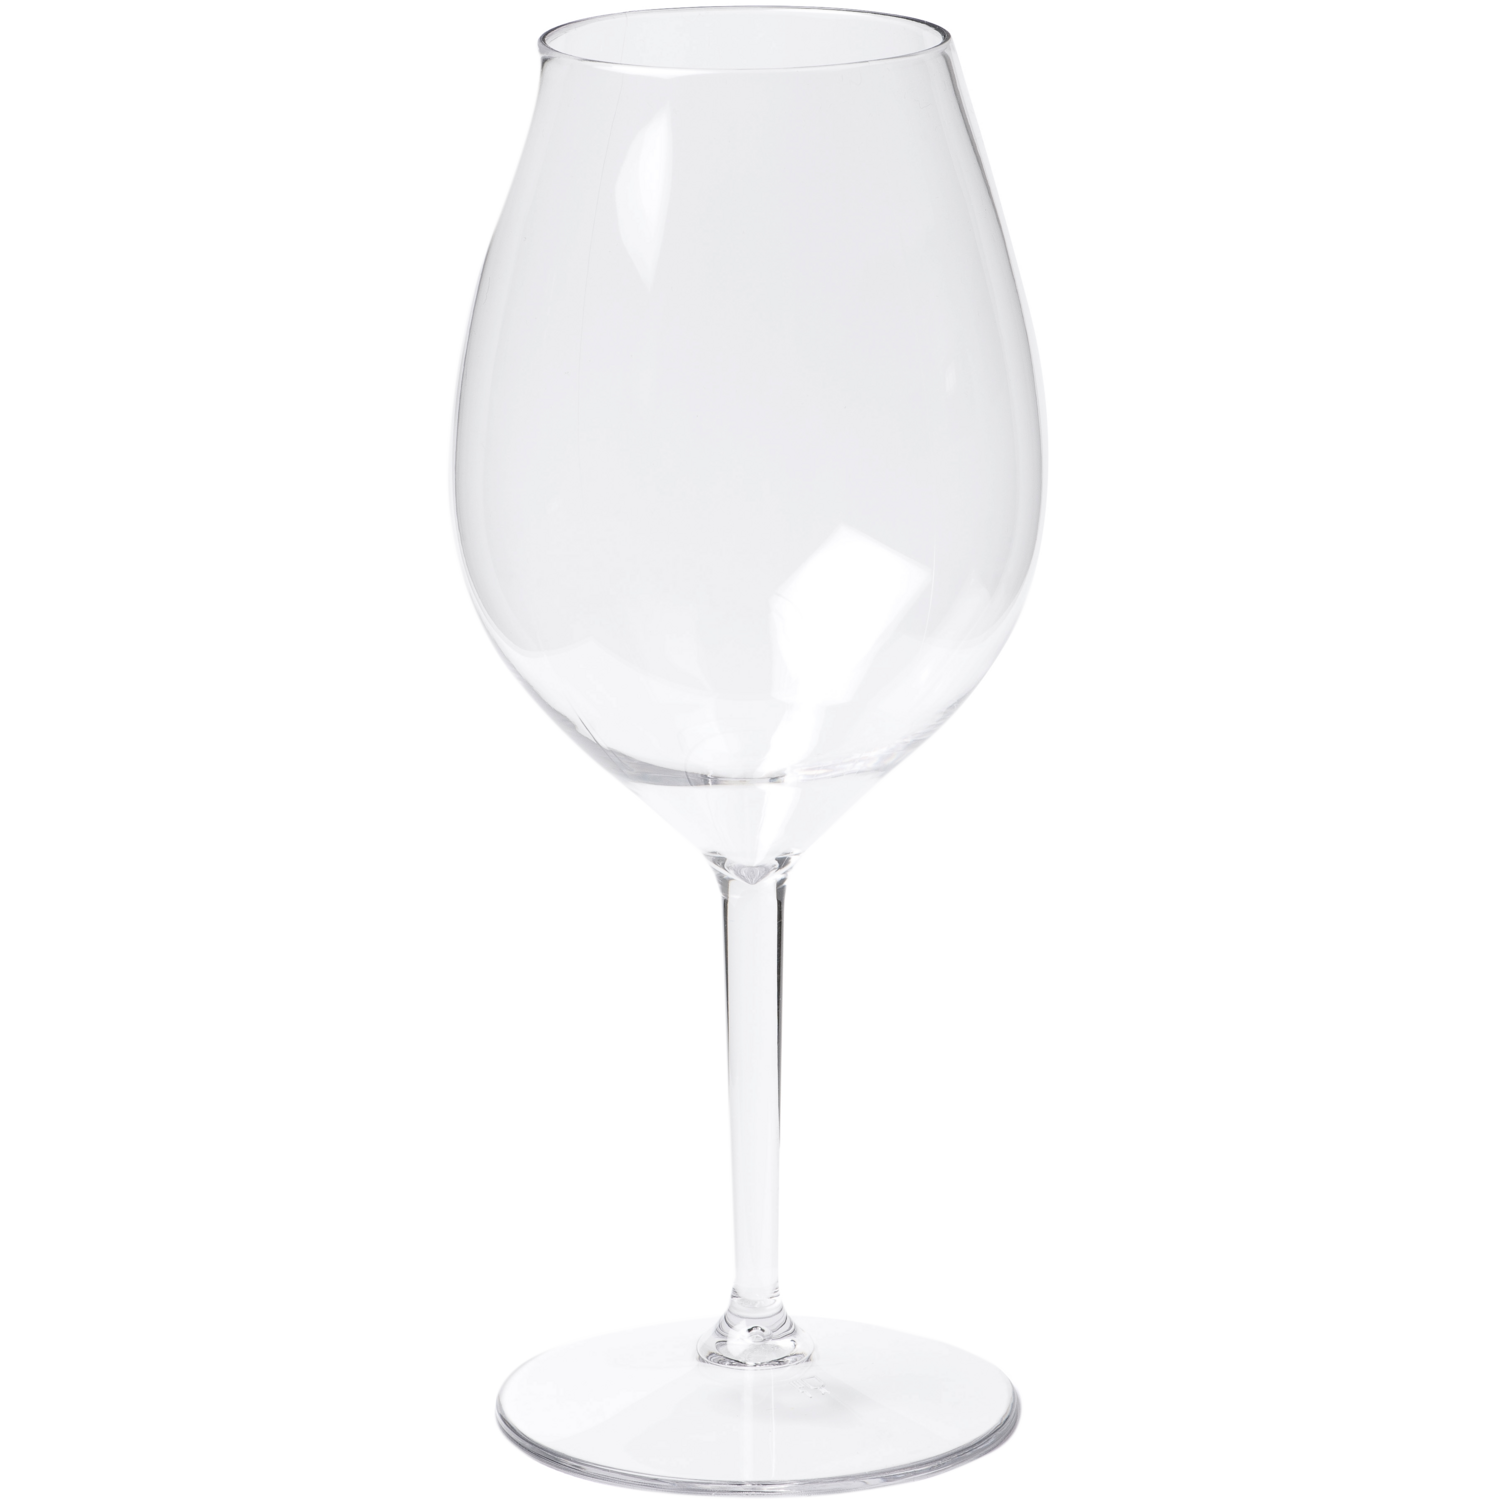 DEPA® Glas, wijnglas, reusable, pETG, 510ml, transparant 1